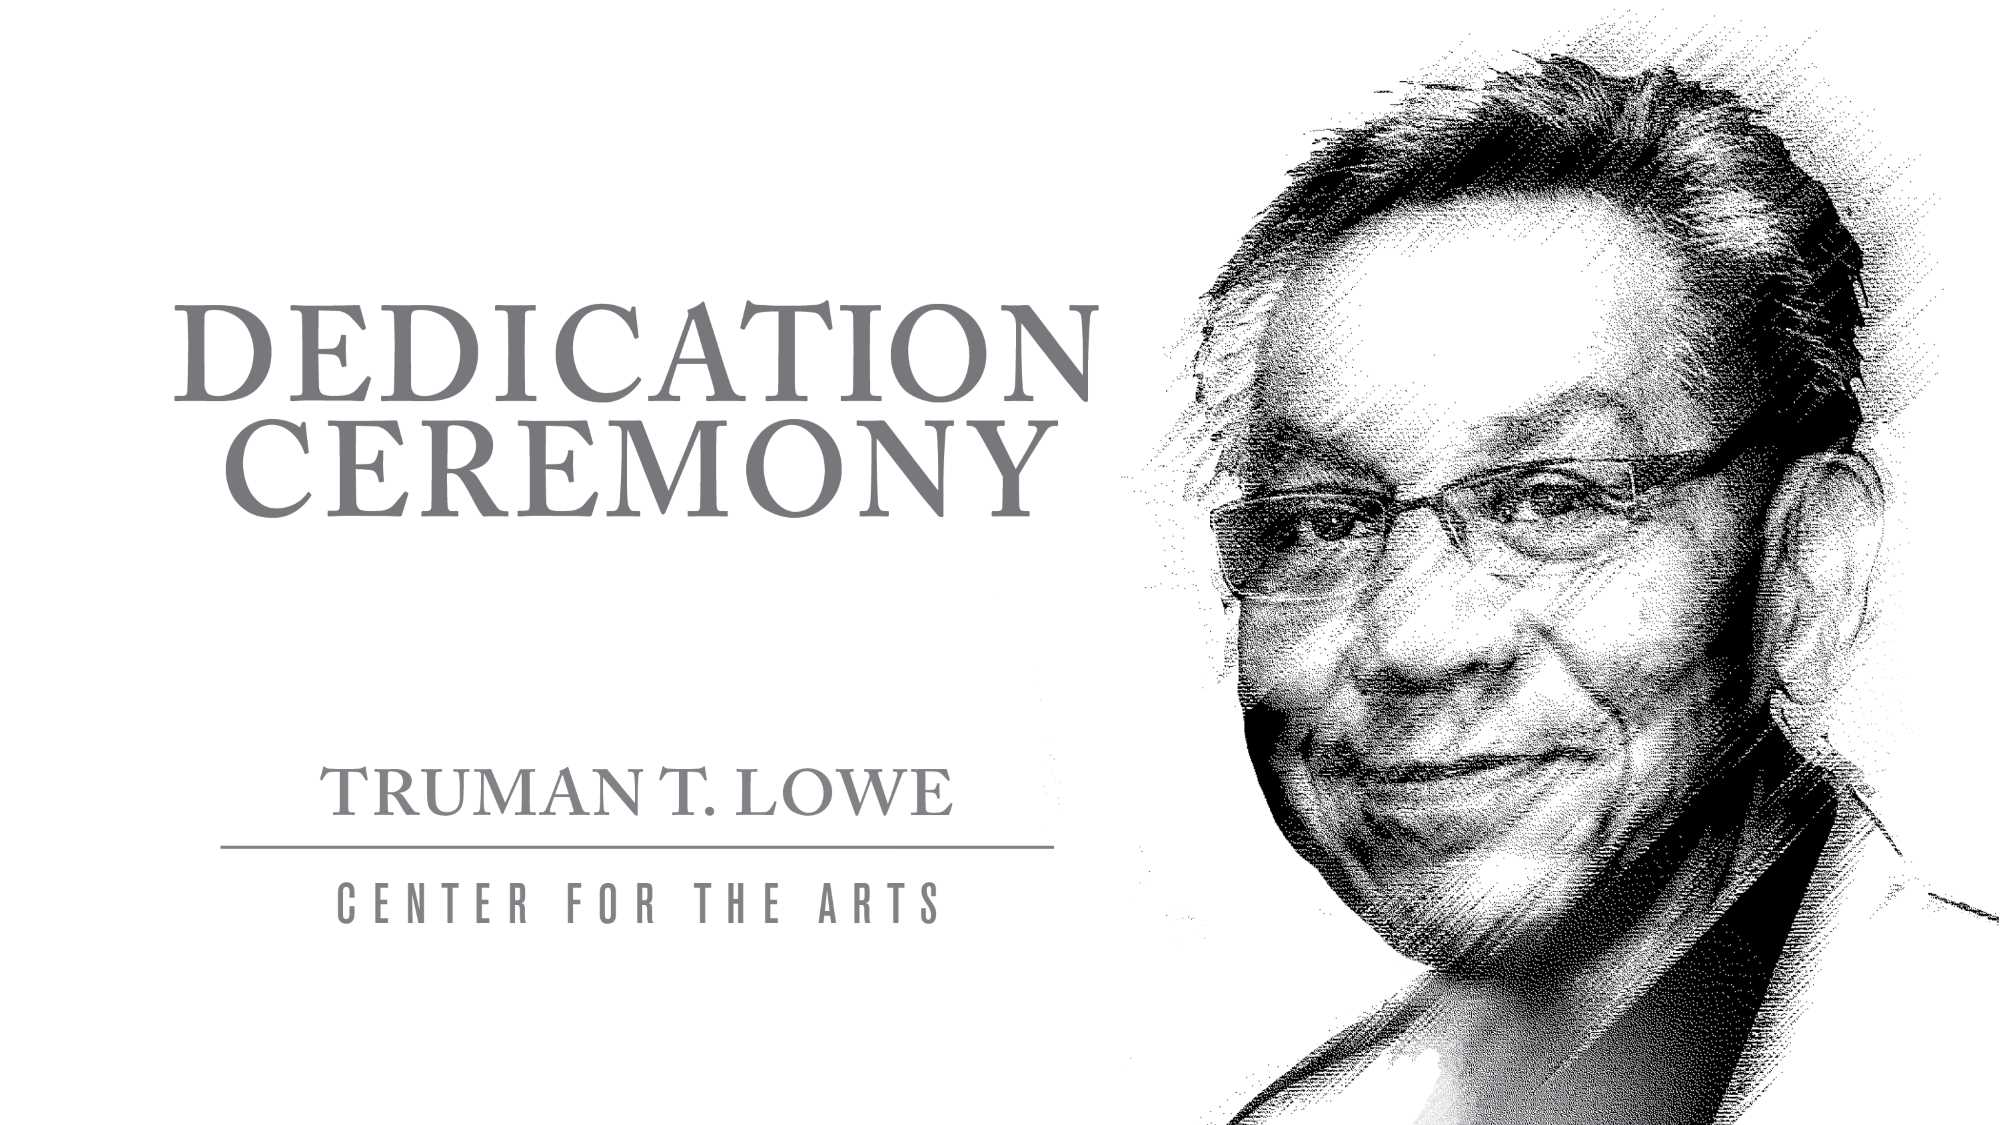 Truman Lowe Dedication ceremony